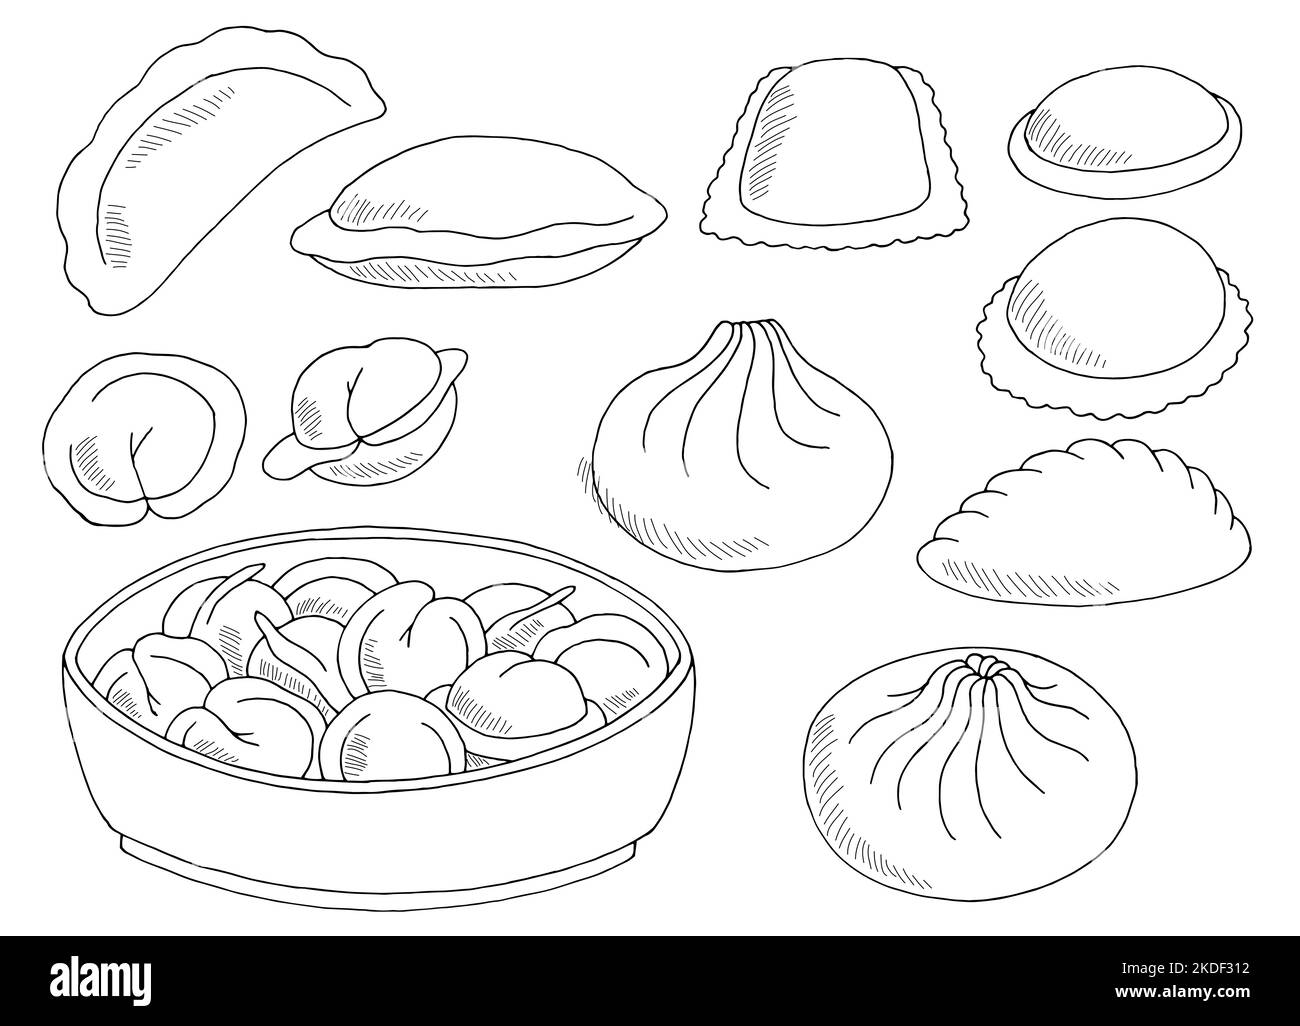 Dumplings set graphic food black white sketch isolated illustration vector Stock Vector